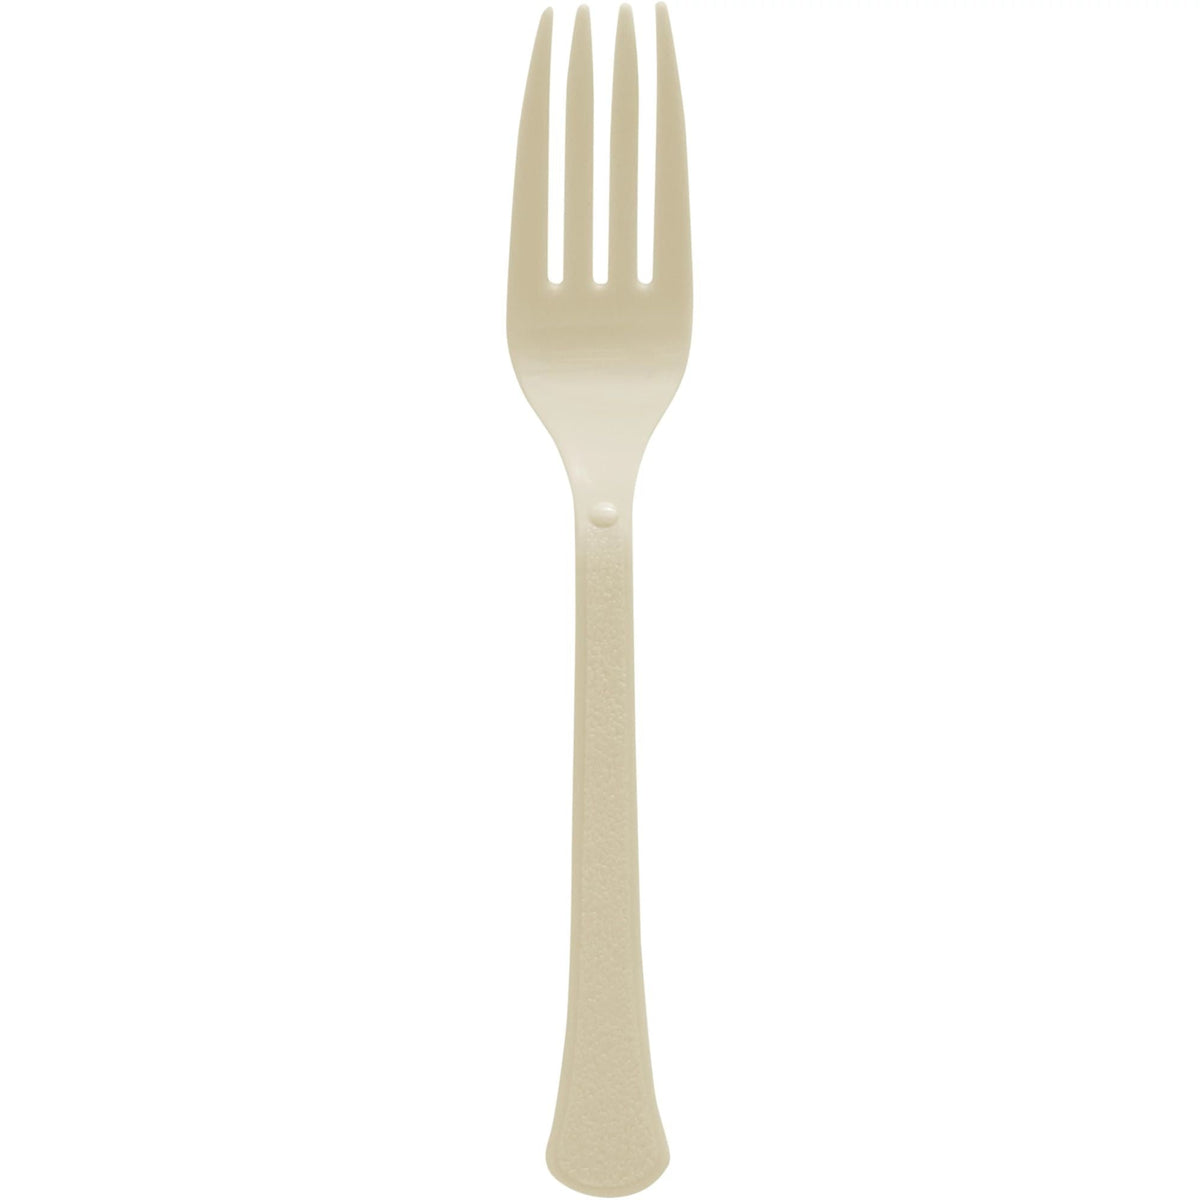 Vanilla Cream Forks -50 Count Heavyweight PP( Polypropylene) Forks